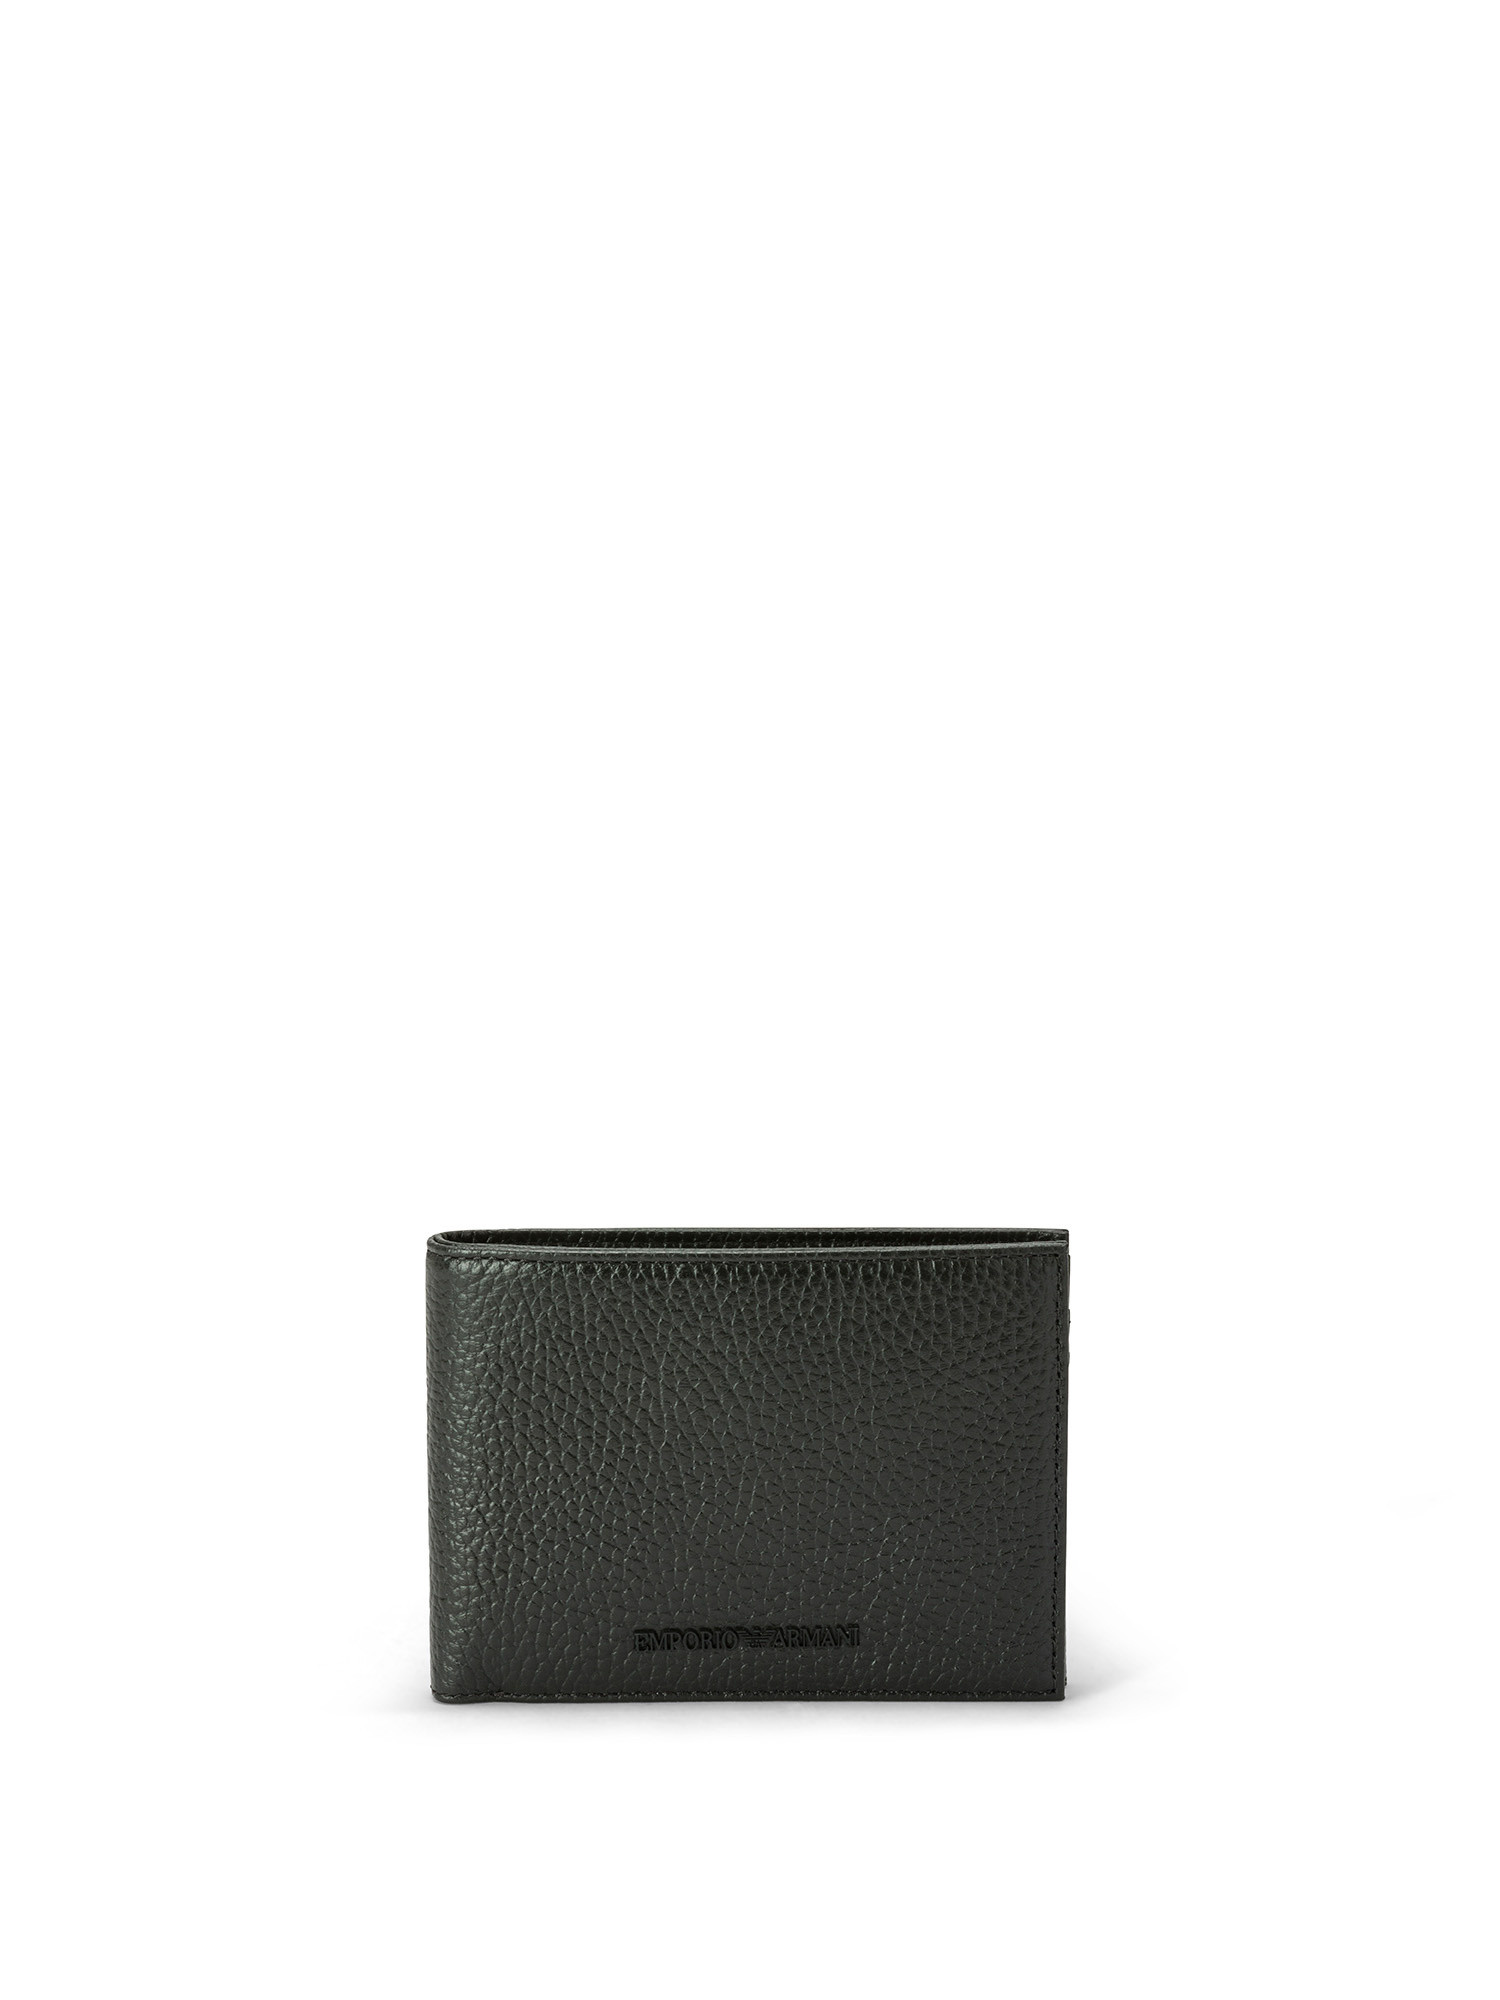 Emporio Armani - Tumbled leather wallet, Black, large image number 0